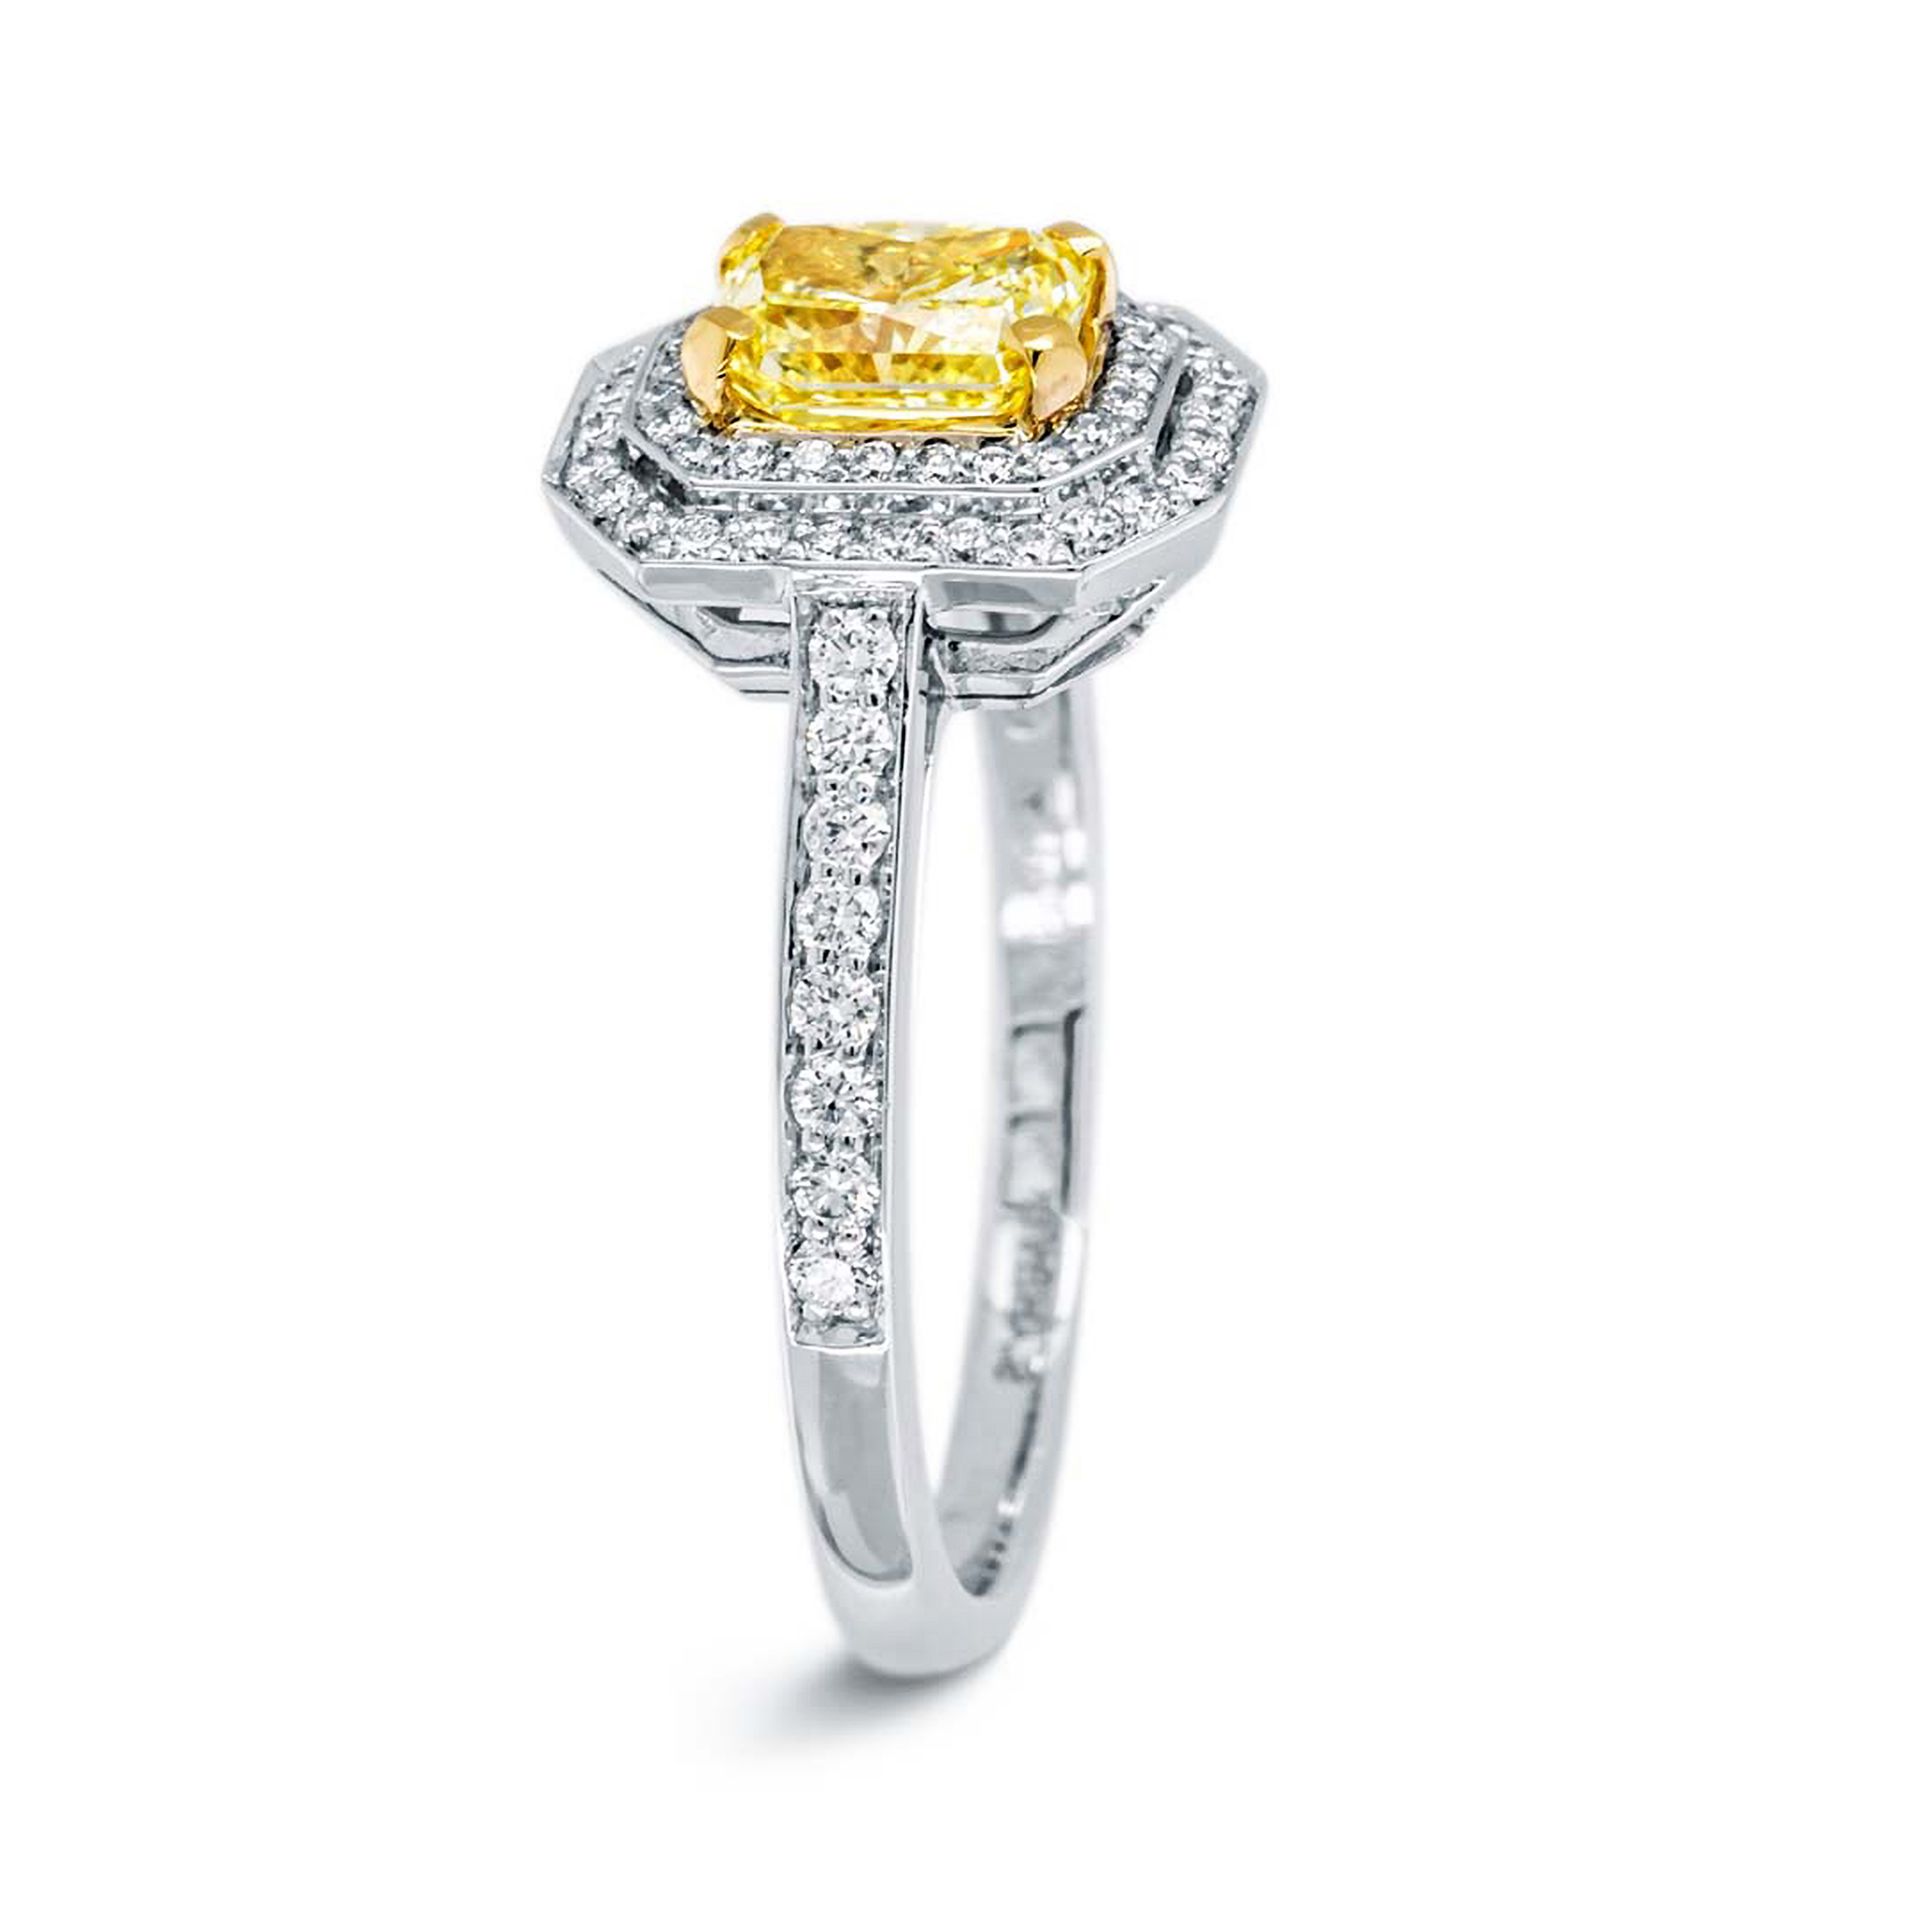 Verlobungsring Platin und 18 Karat Gelbgold | Engagement Ring Platinum and 18 Karat Yellow Gold - Image 2 of 3